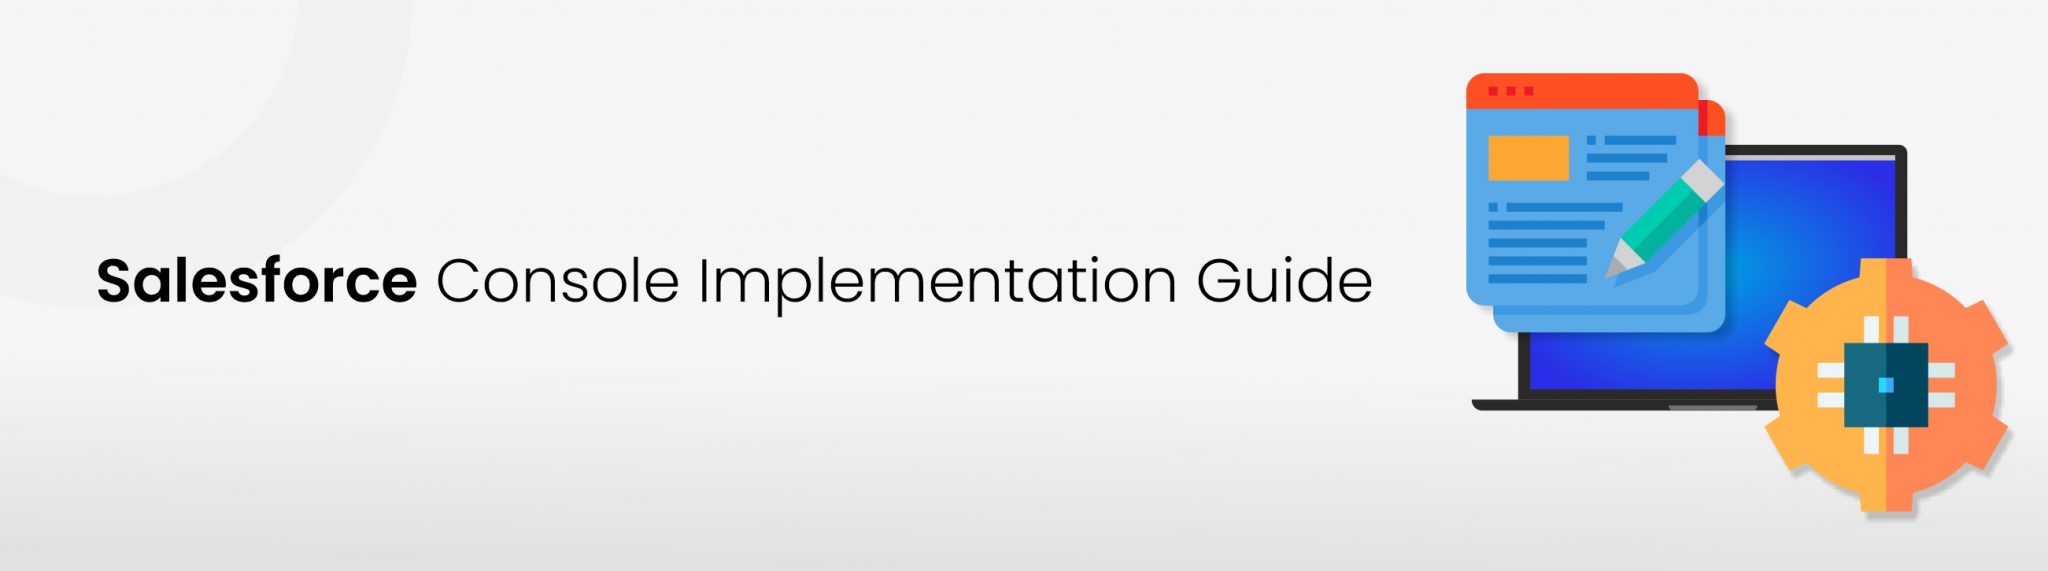 Salesforce-Console-Implementation-Guide